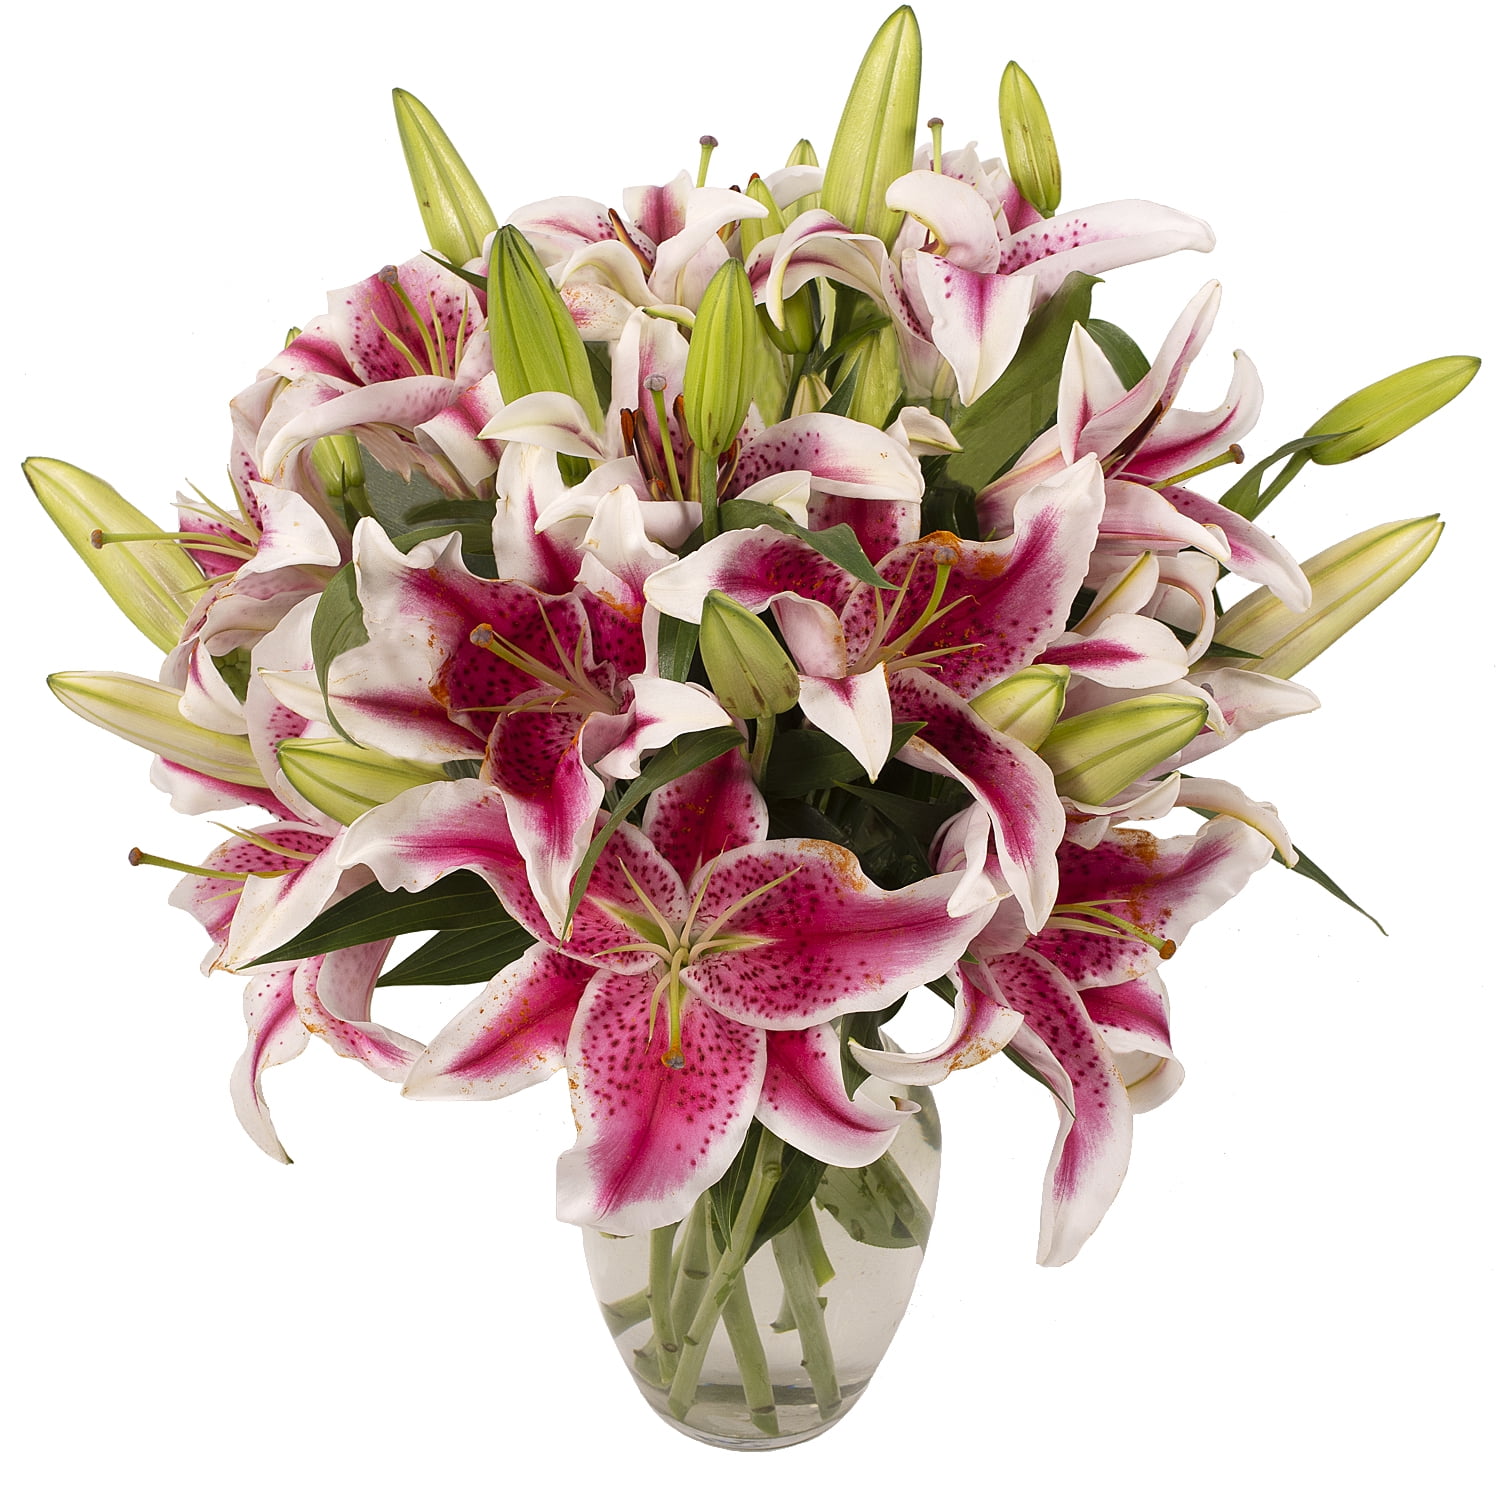 Stargazer Lilies, 7 Stems, Vase Included - Walmart.com - Walmart.com